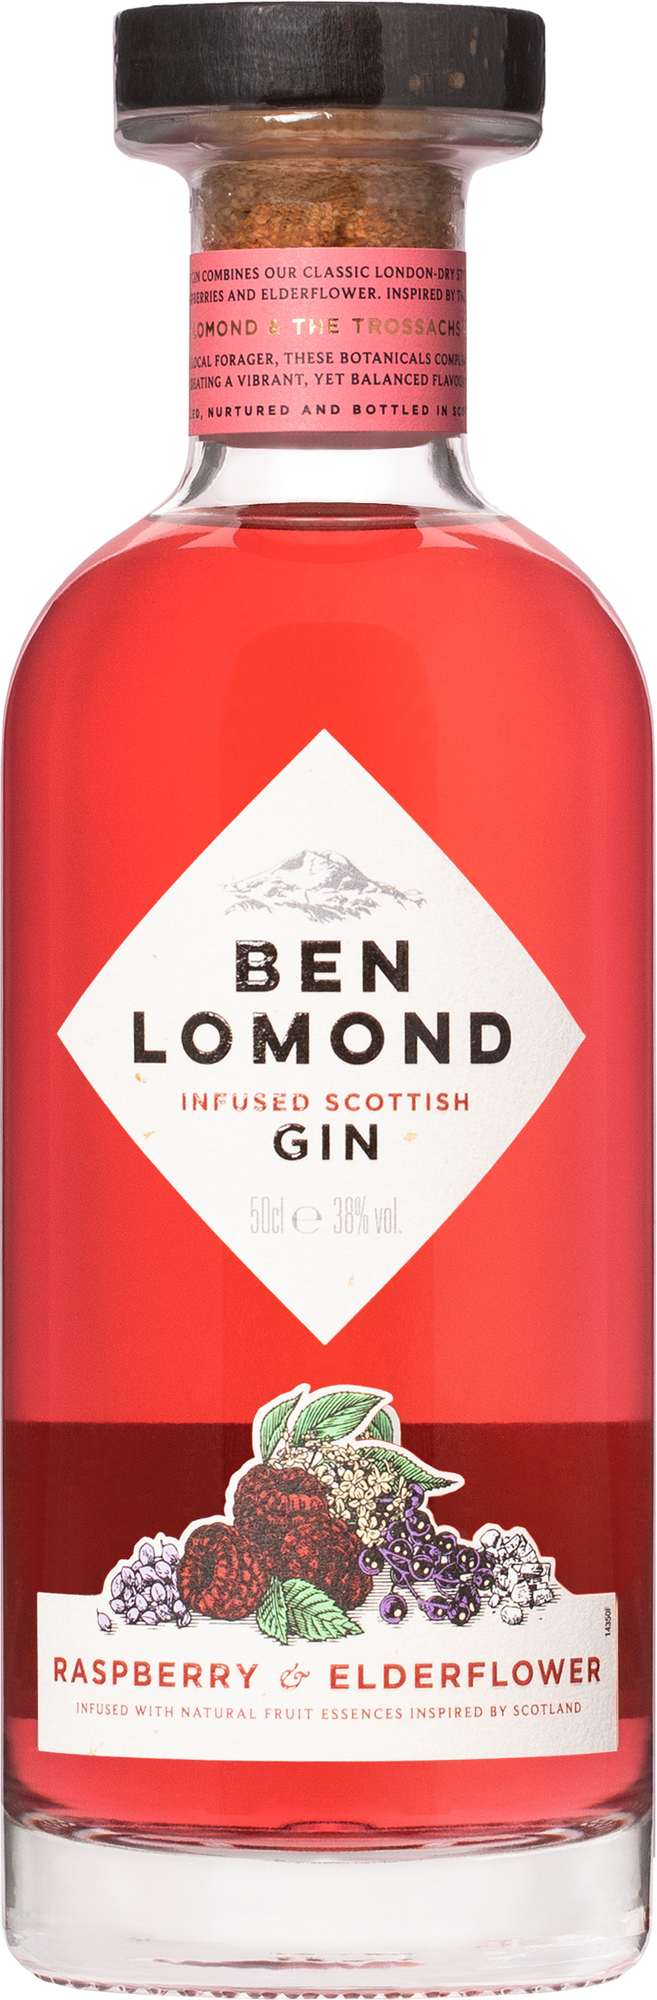 Ben Lomond Raspberry & Elderflower Gin 38% 0,5l